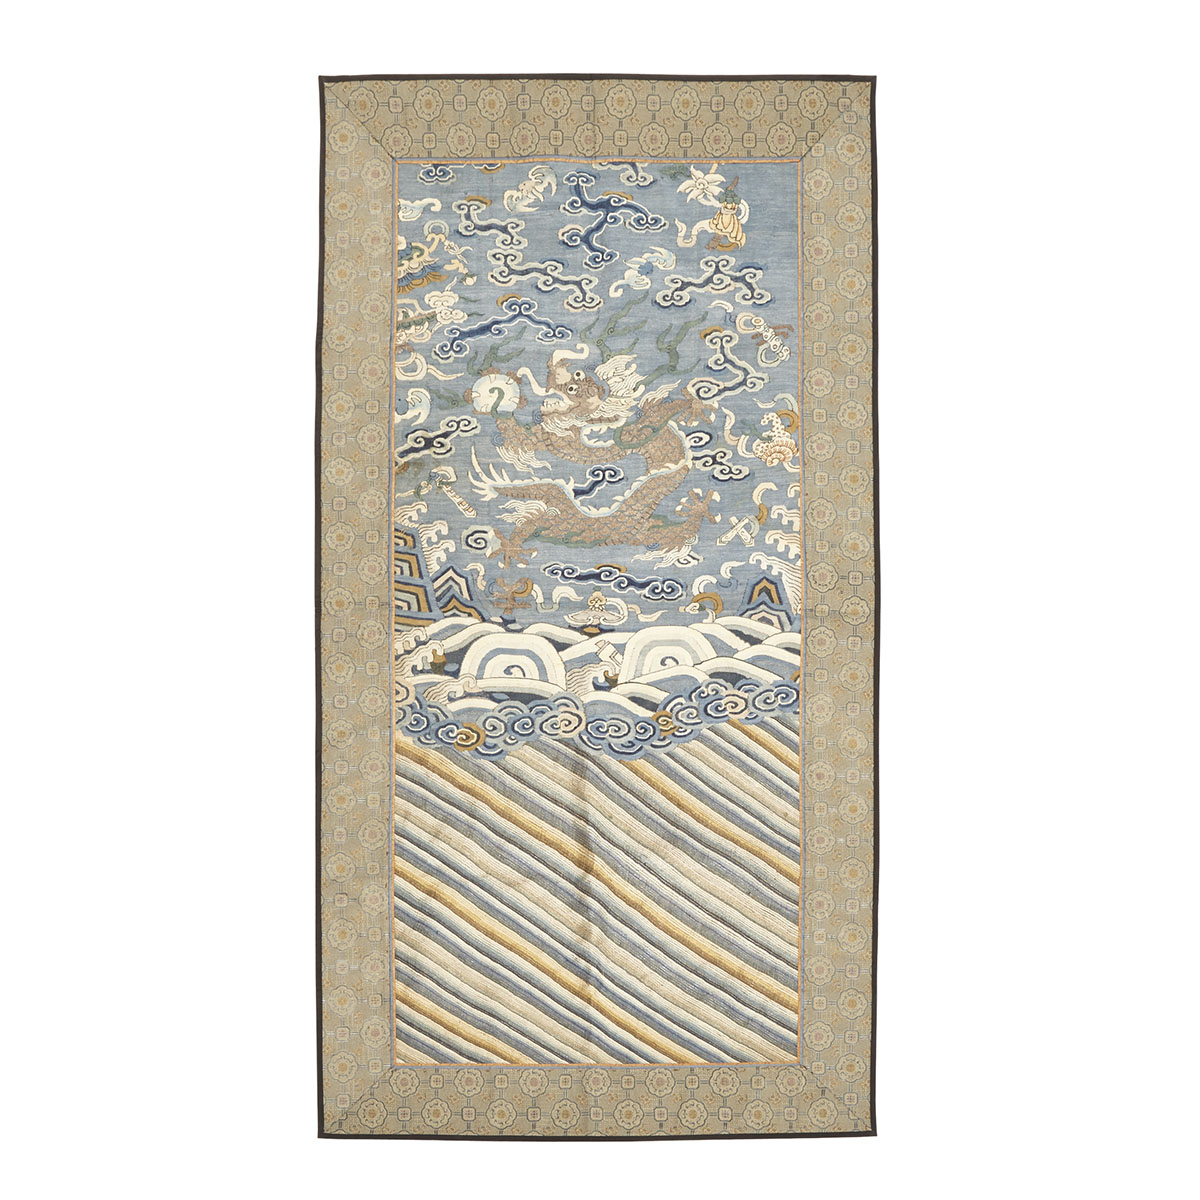 Imperial Dragon Kesi Tapestry, 19th Century